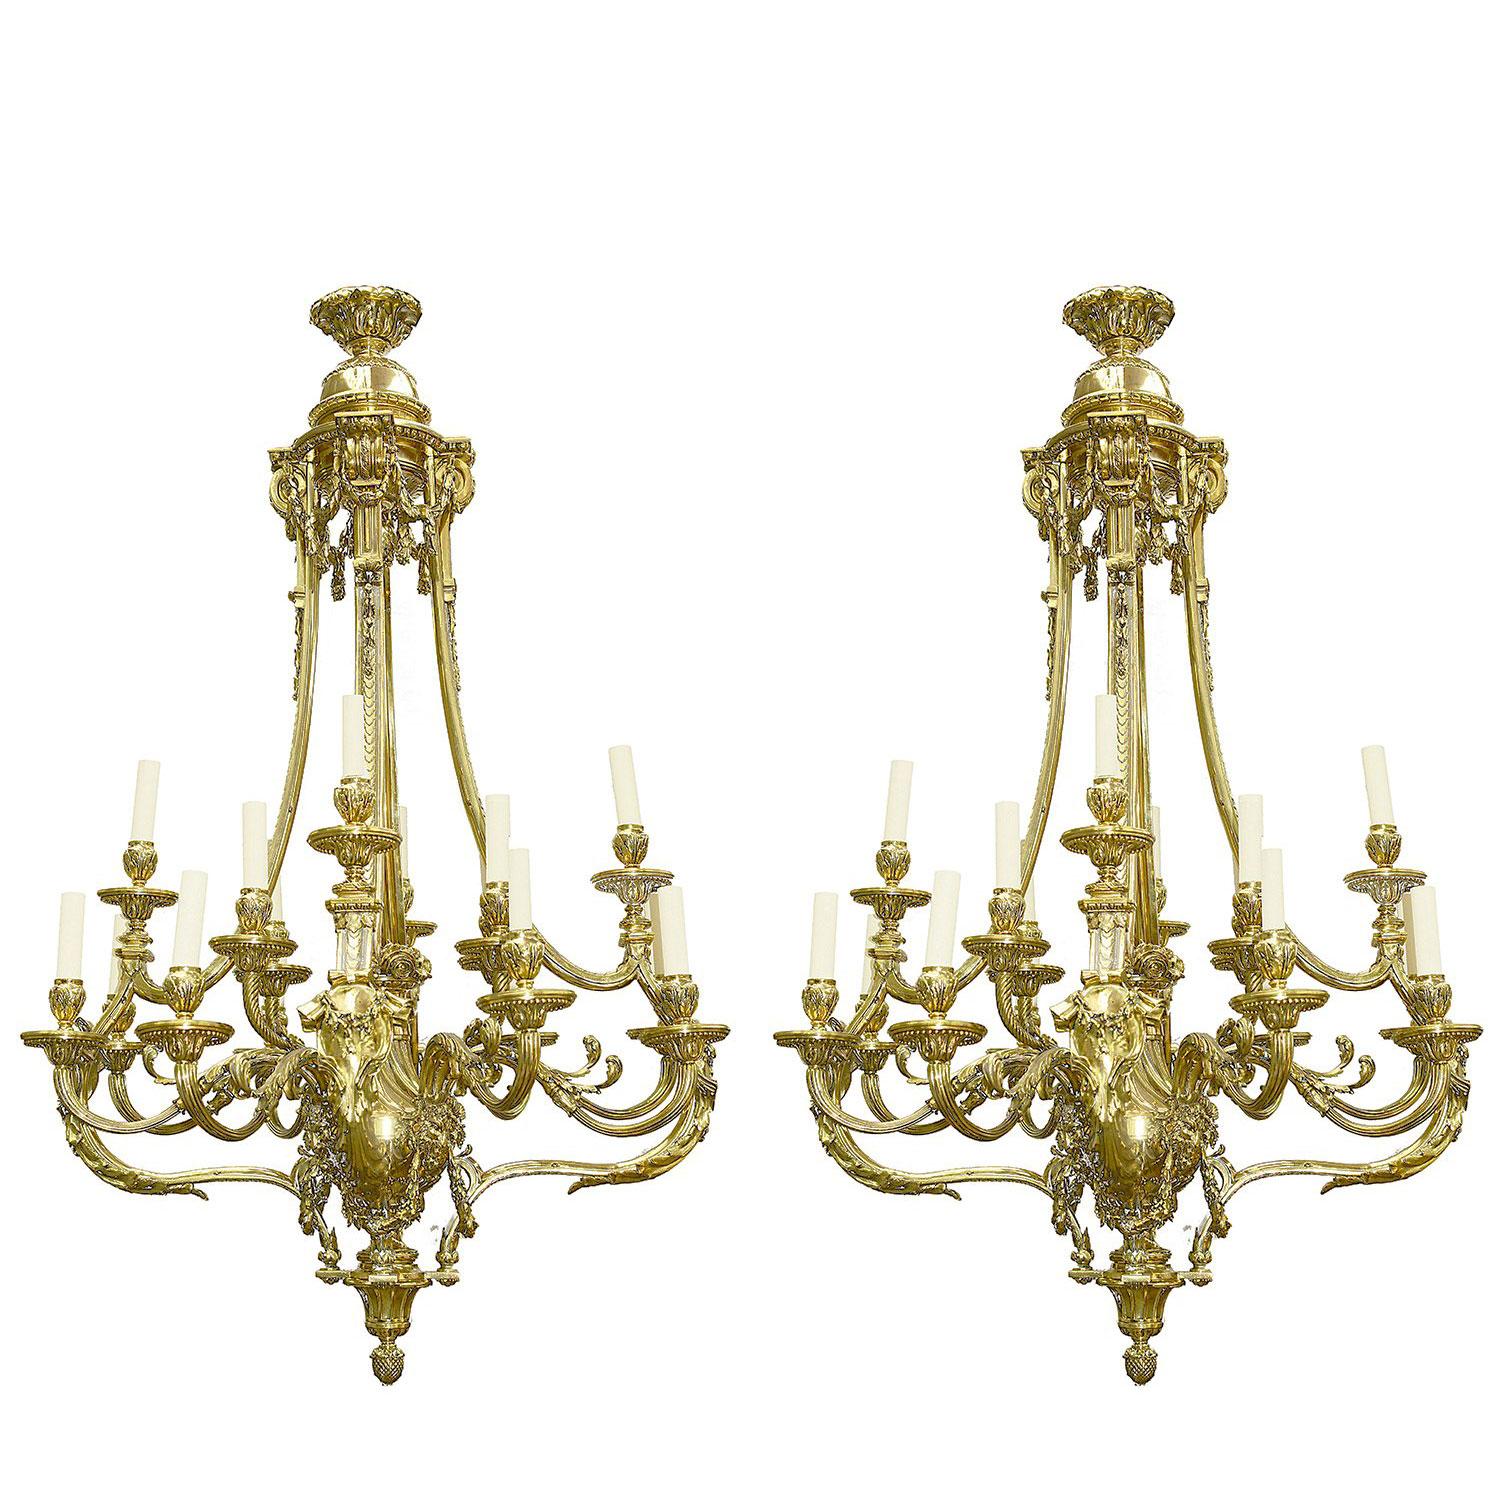 Klassisches Paar klassischer Goldbronze-Kronleuchter aus dem 19. Jahrhundert